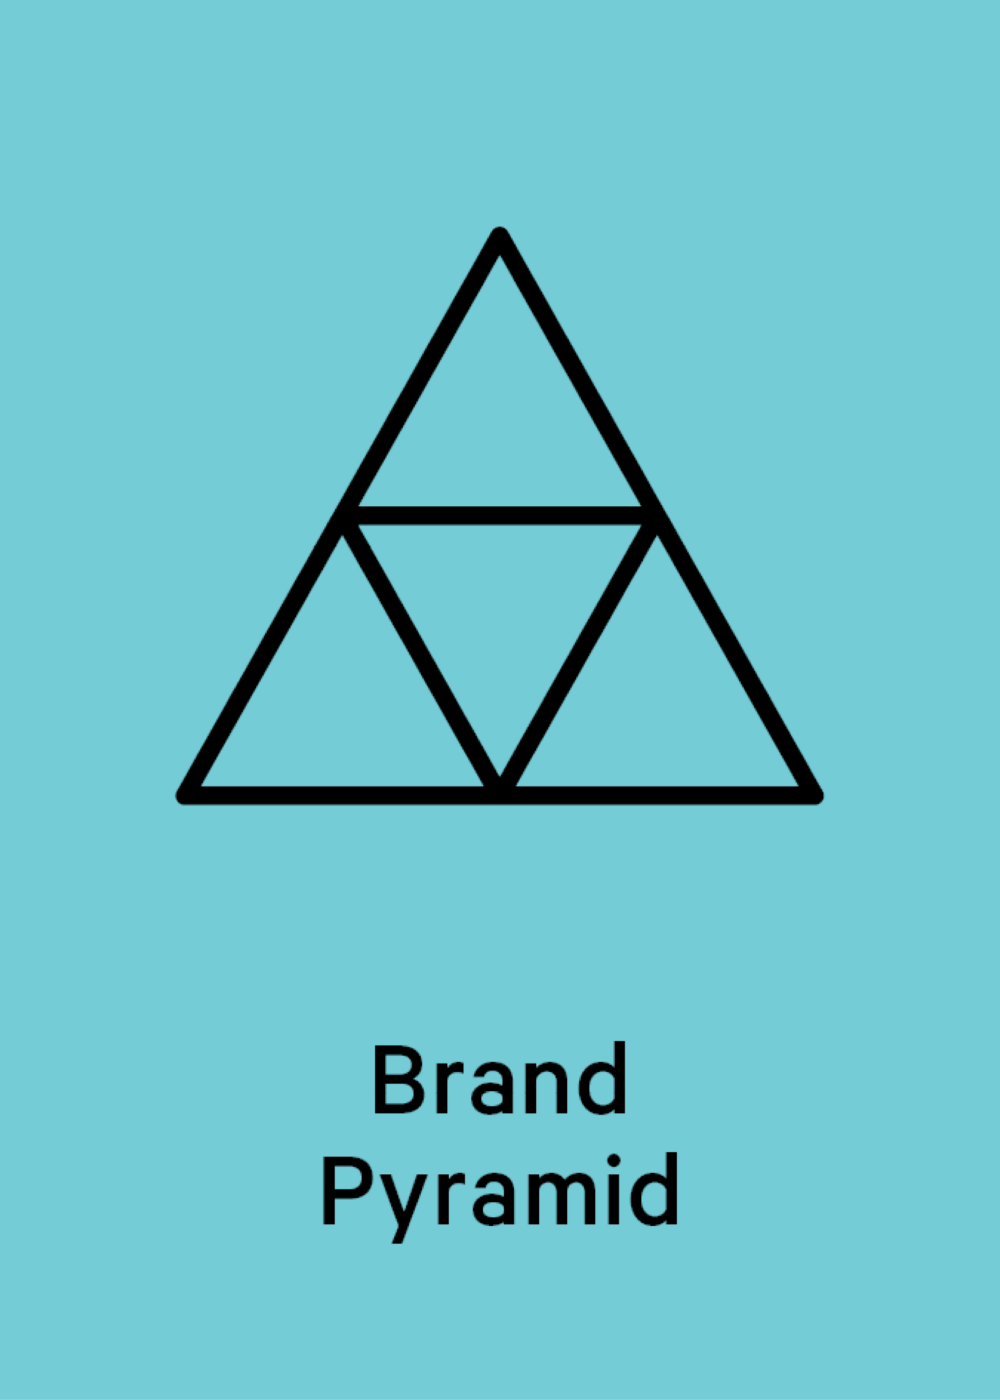 Brandpyramid Templ News Teaser 1200x670